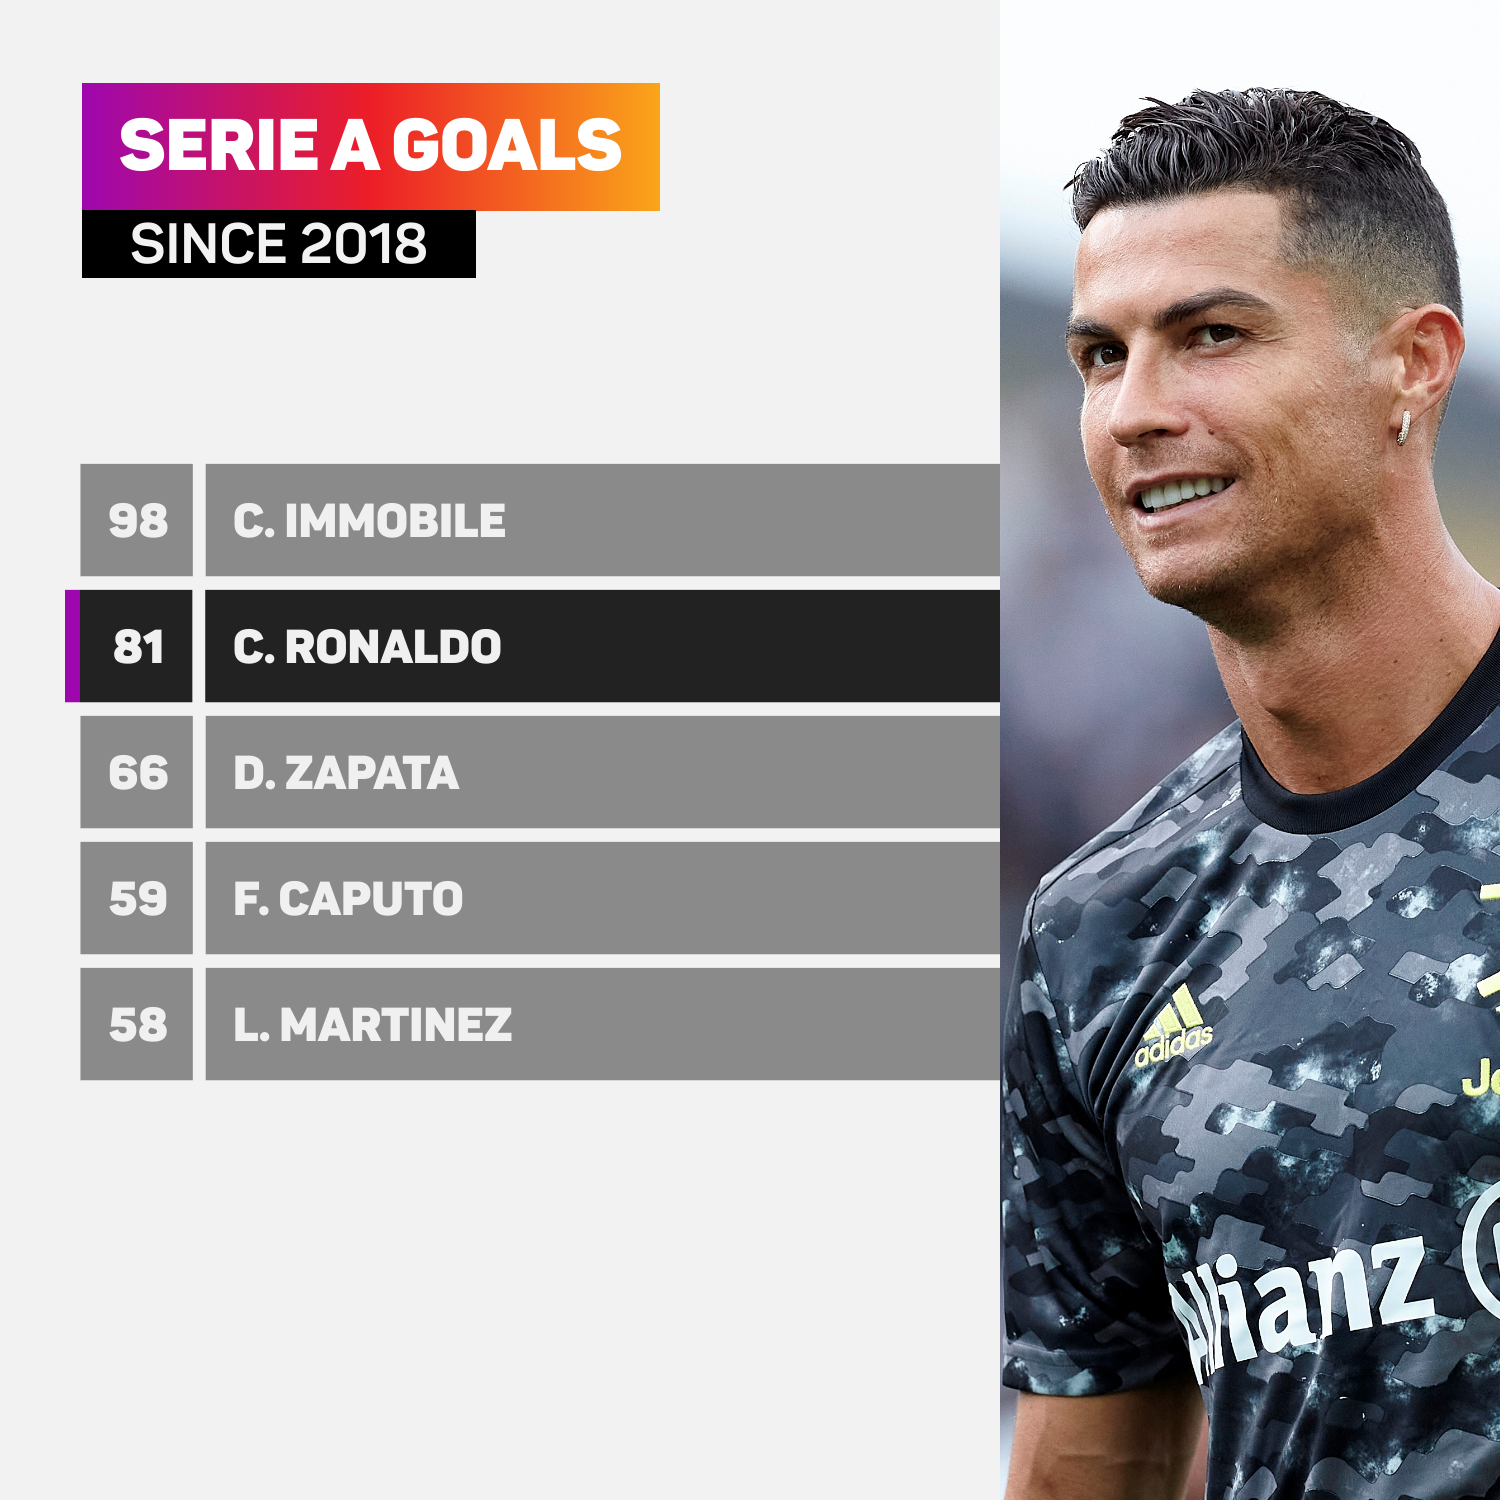 Only Ciro Immobile has scored more Serie A goals than Cristiano Ronaldo since 2018